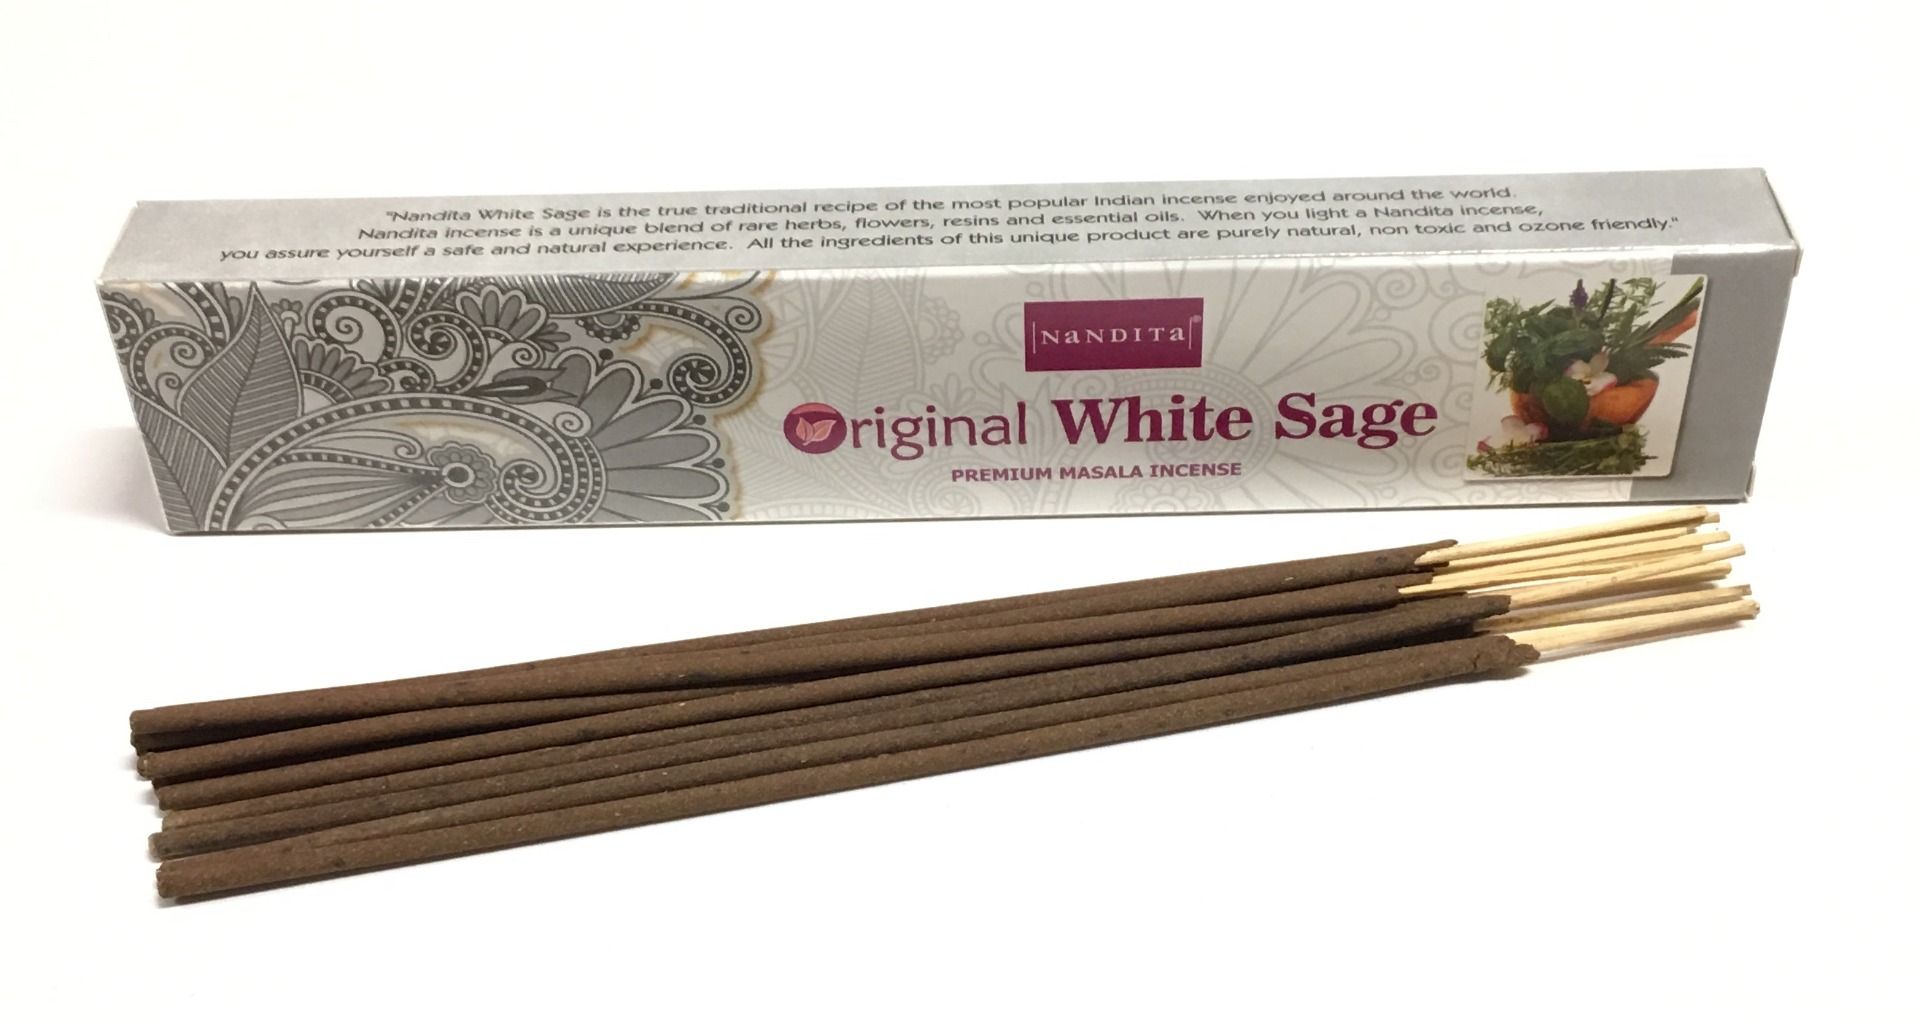 Nandita White Sage Incense Sticks